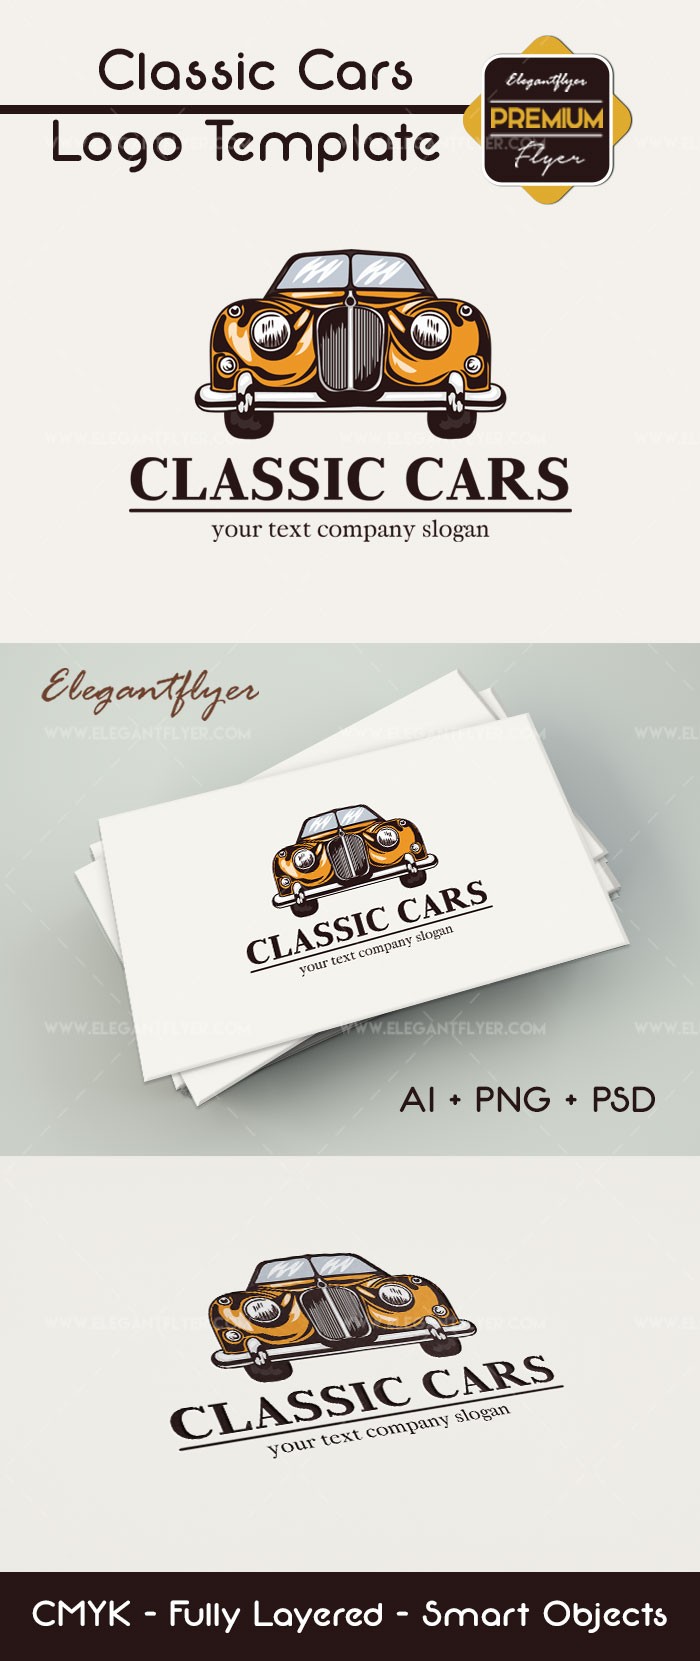 Classic Cars by ElegantFlyer